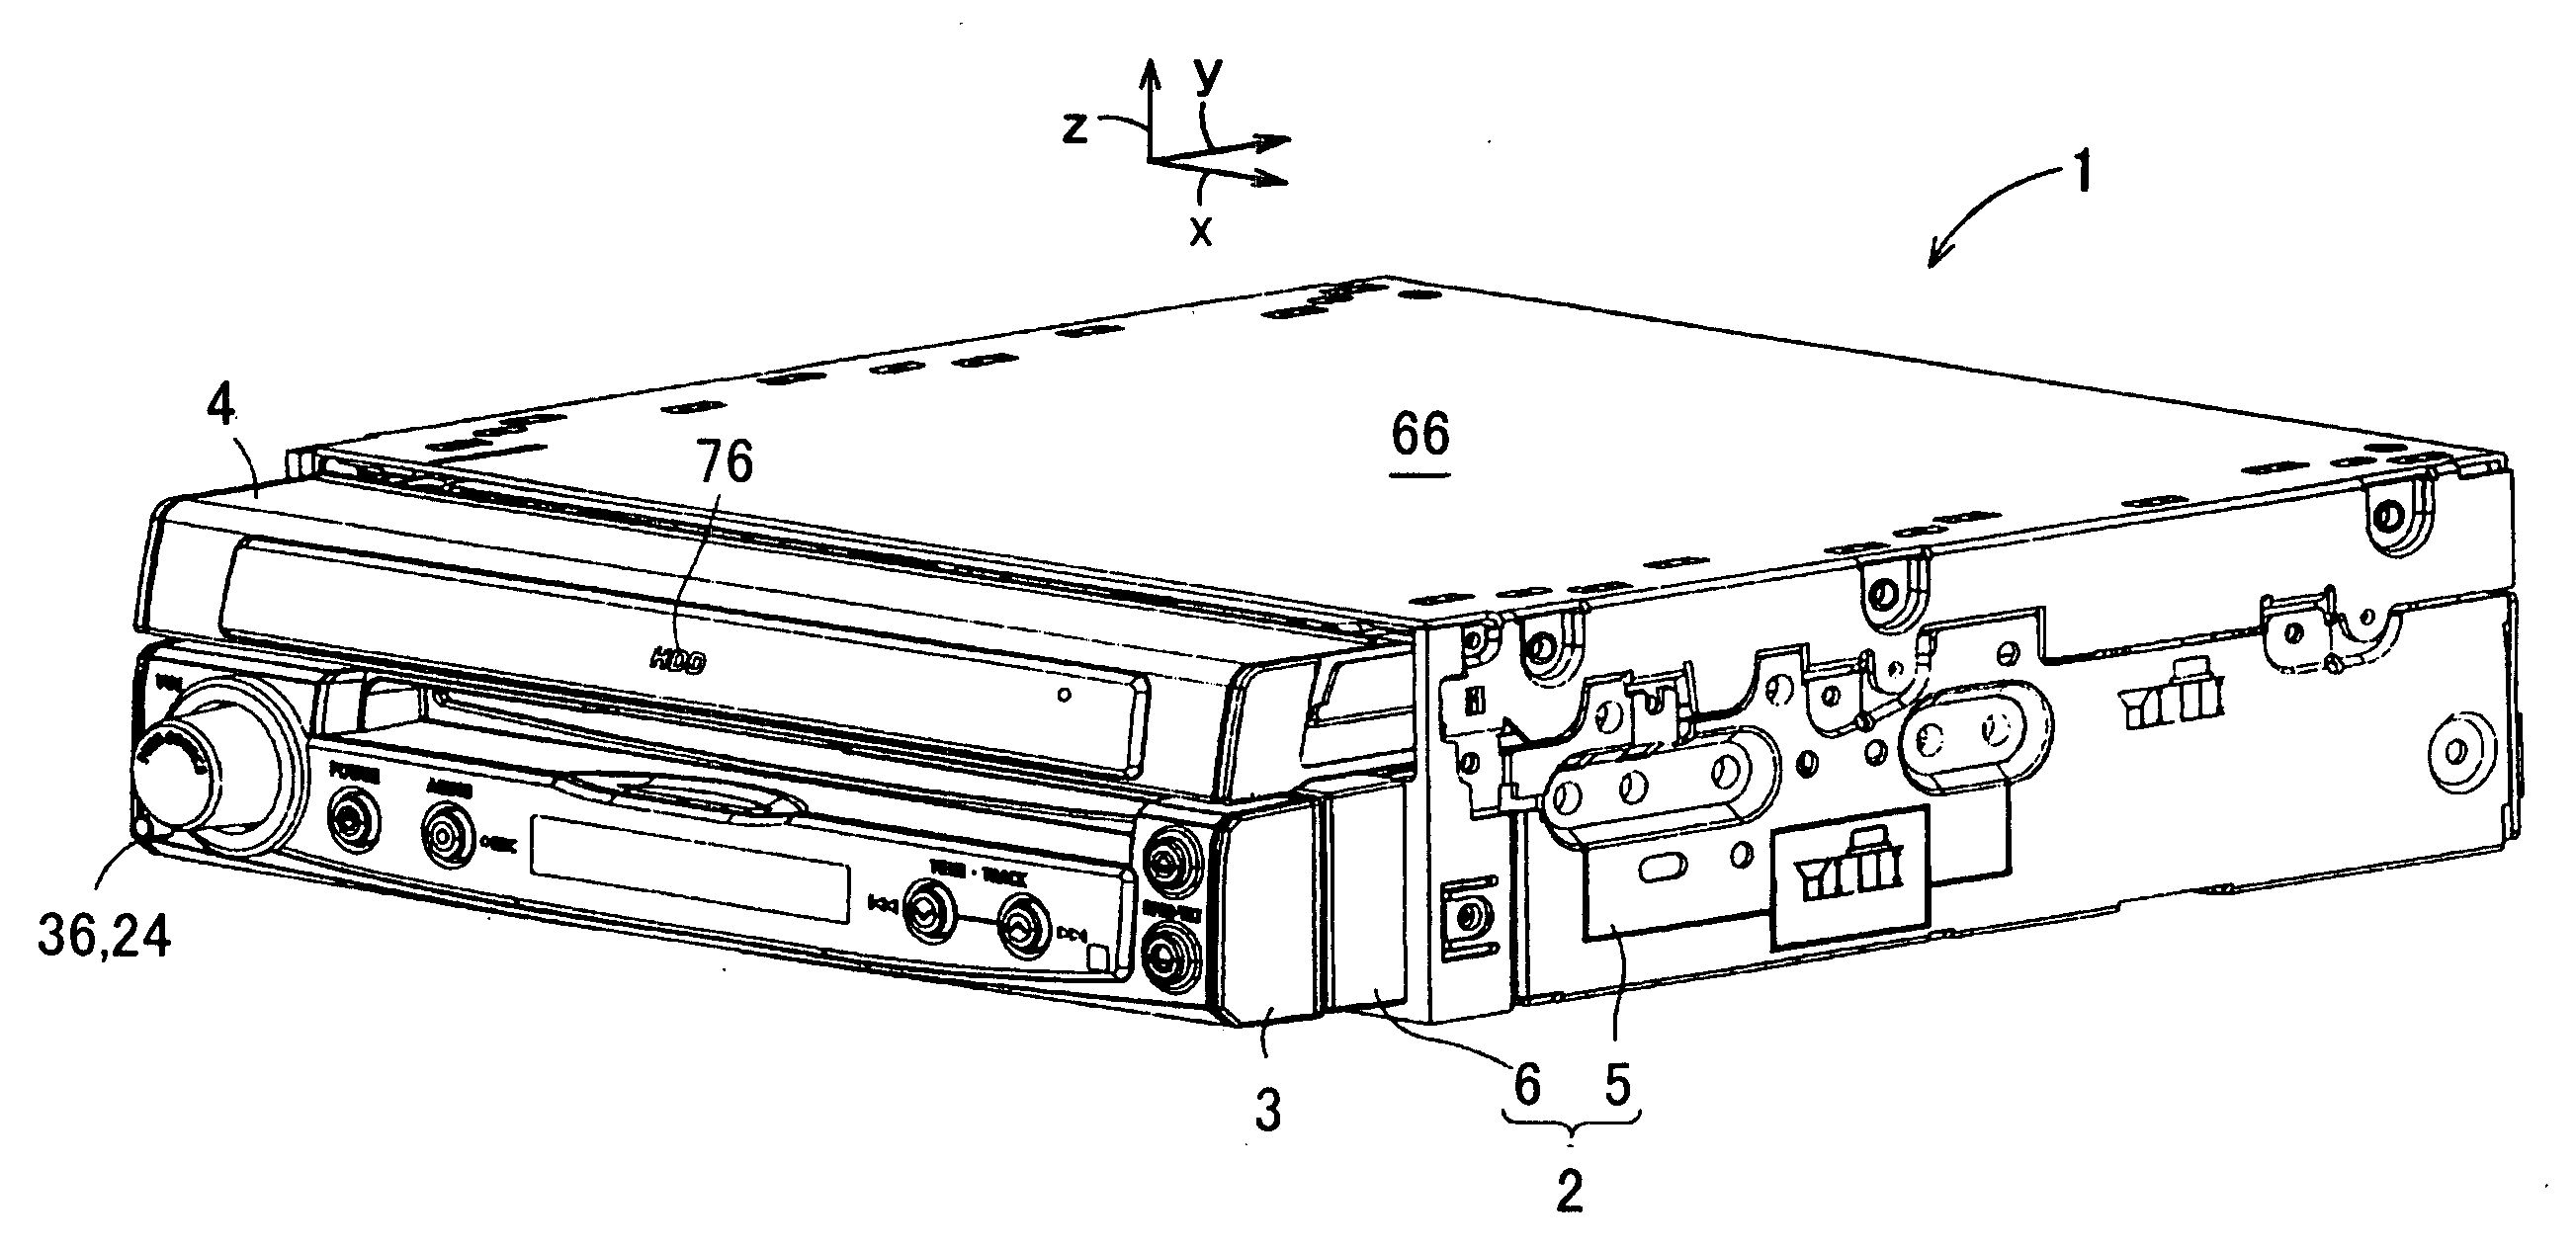 Vehicle-mounted electronic apparatus